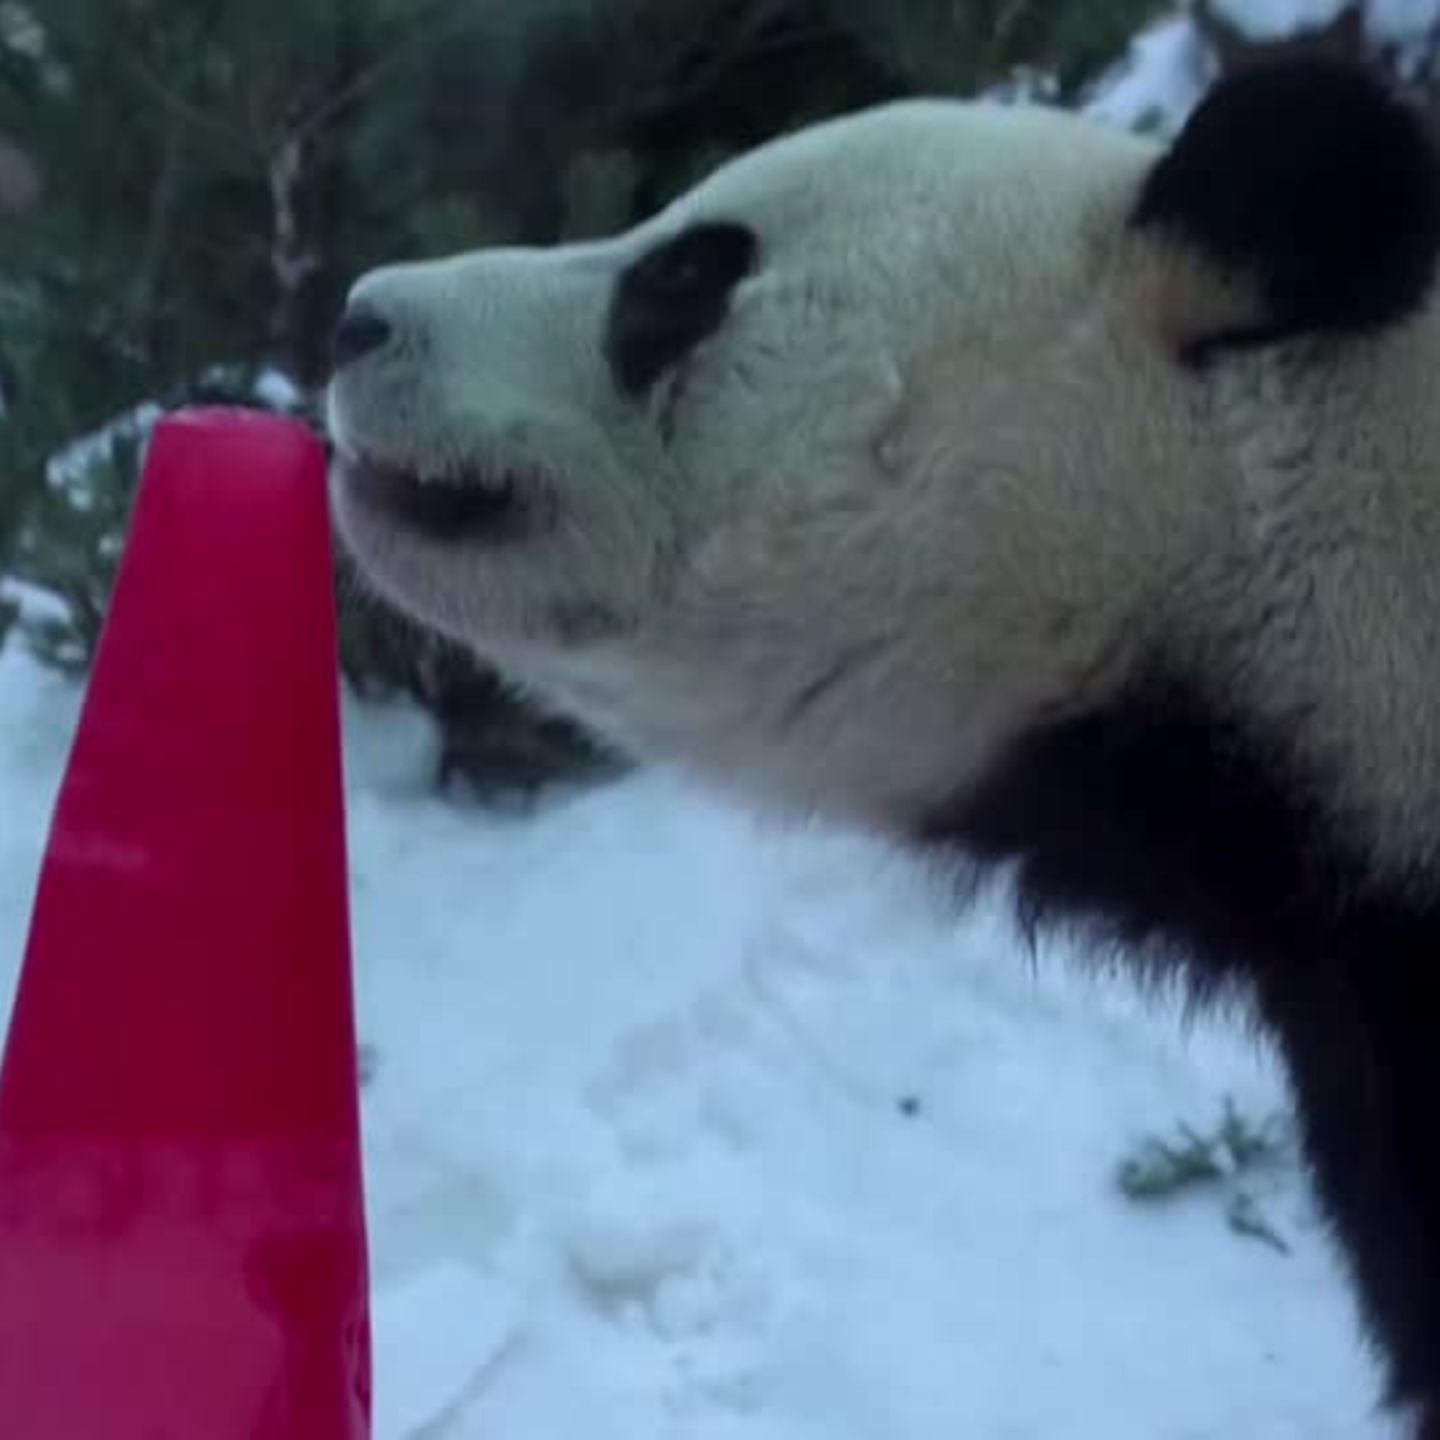 Wollbild Pandabär 